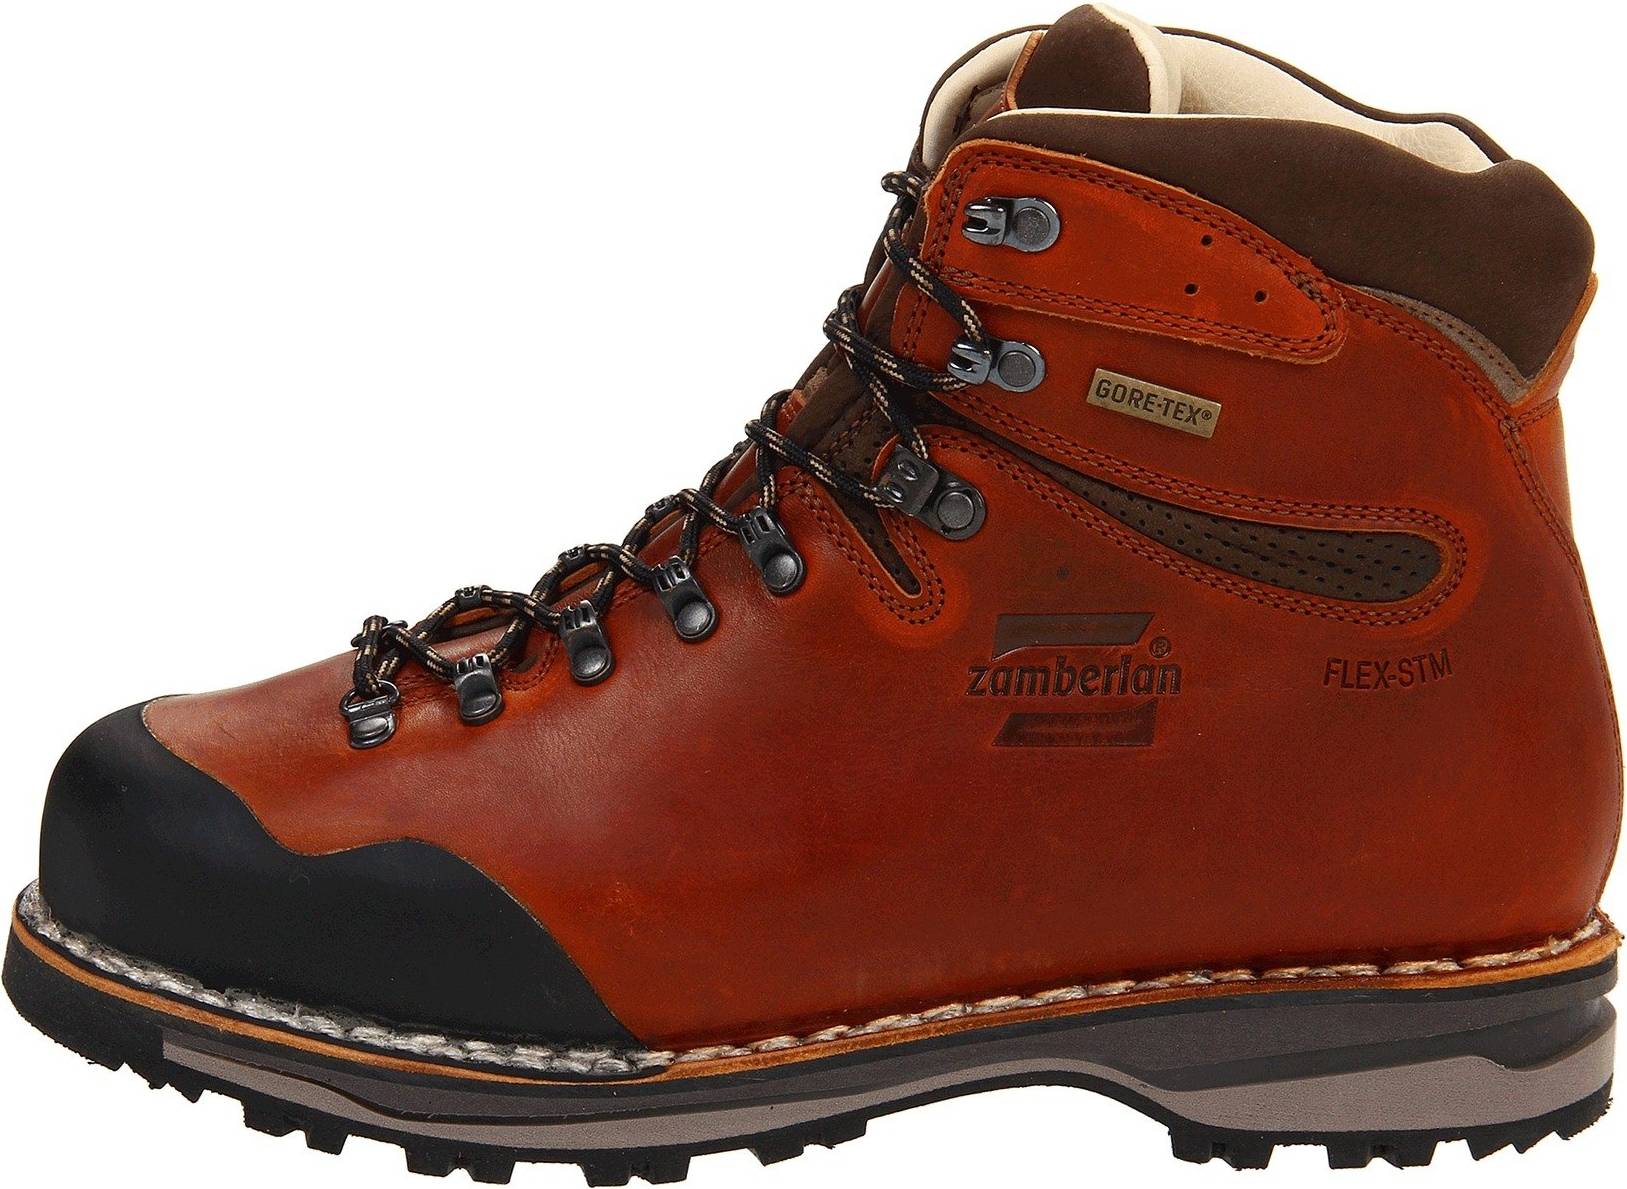 Zamberlan Hiking Boots (11 Models in 